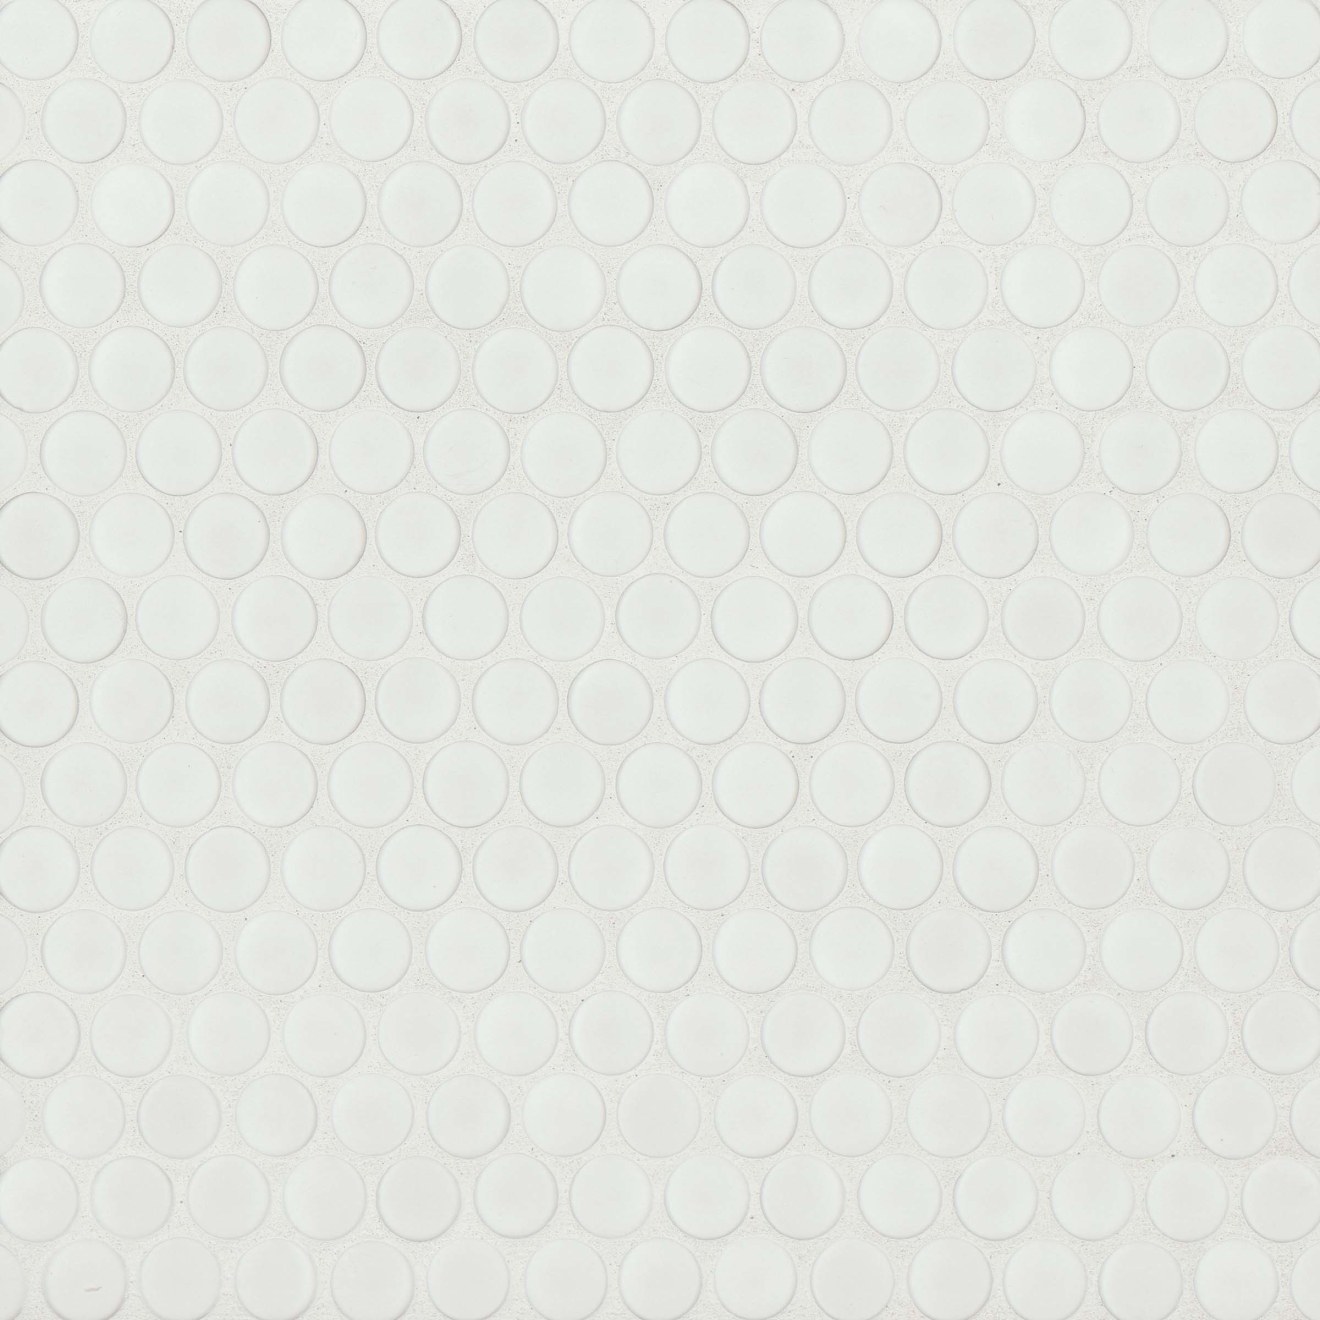 360 3/4" x 3/4" Penny Round Matte Mosaic Tile in White | Bedrosians Tile & Stone